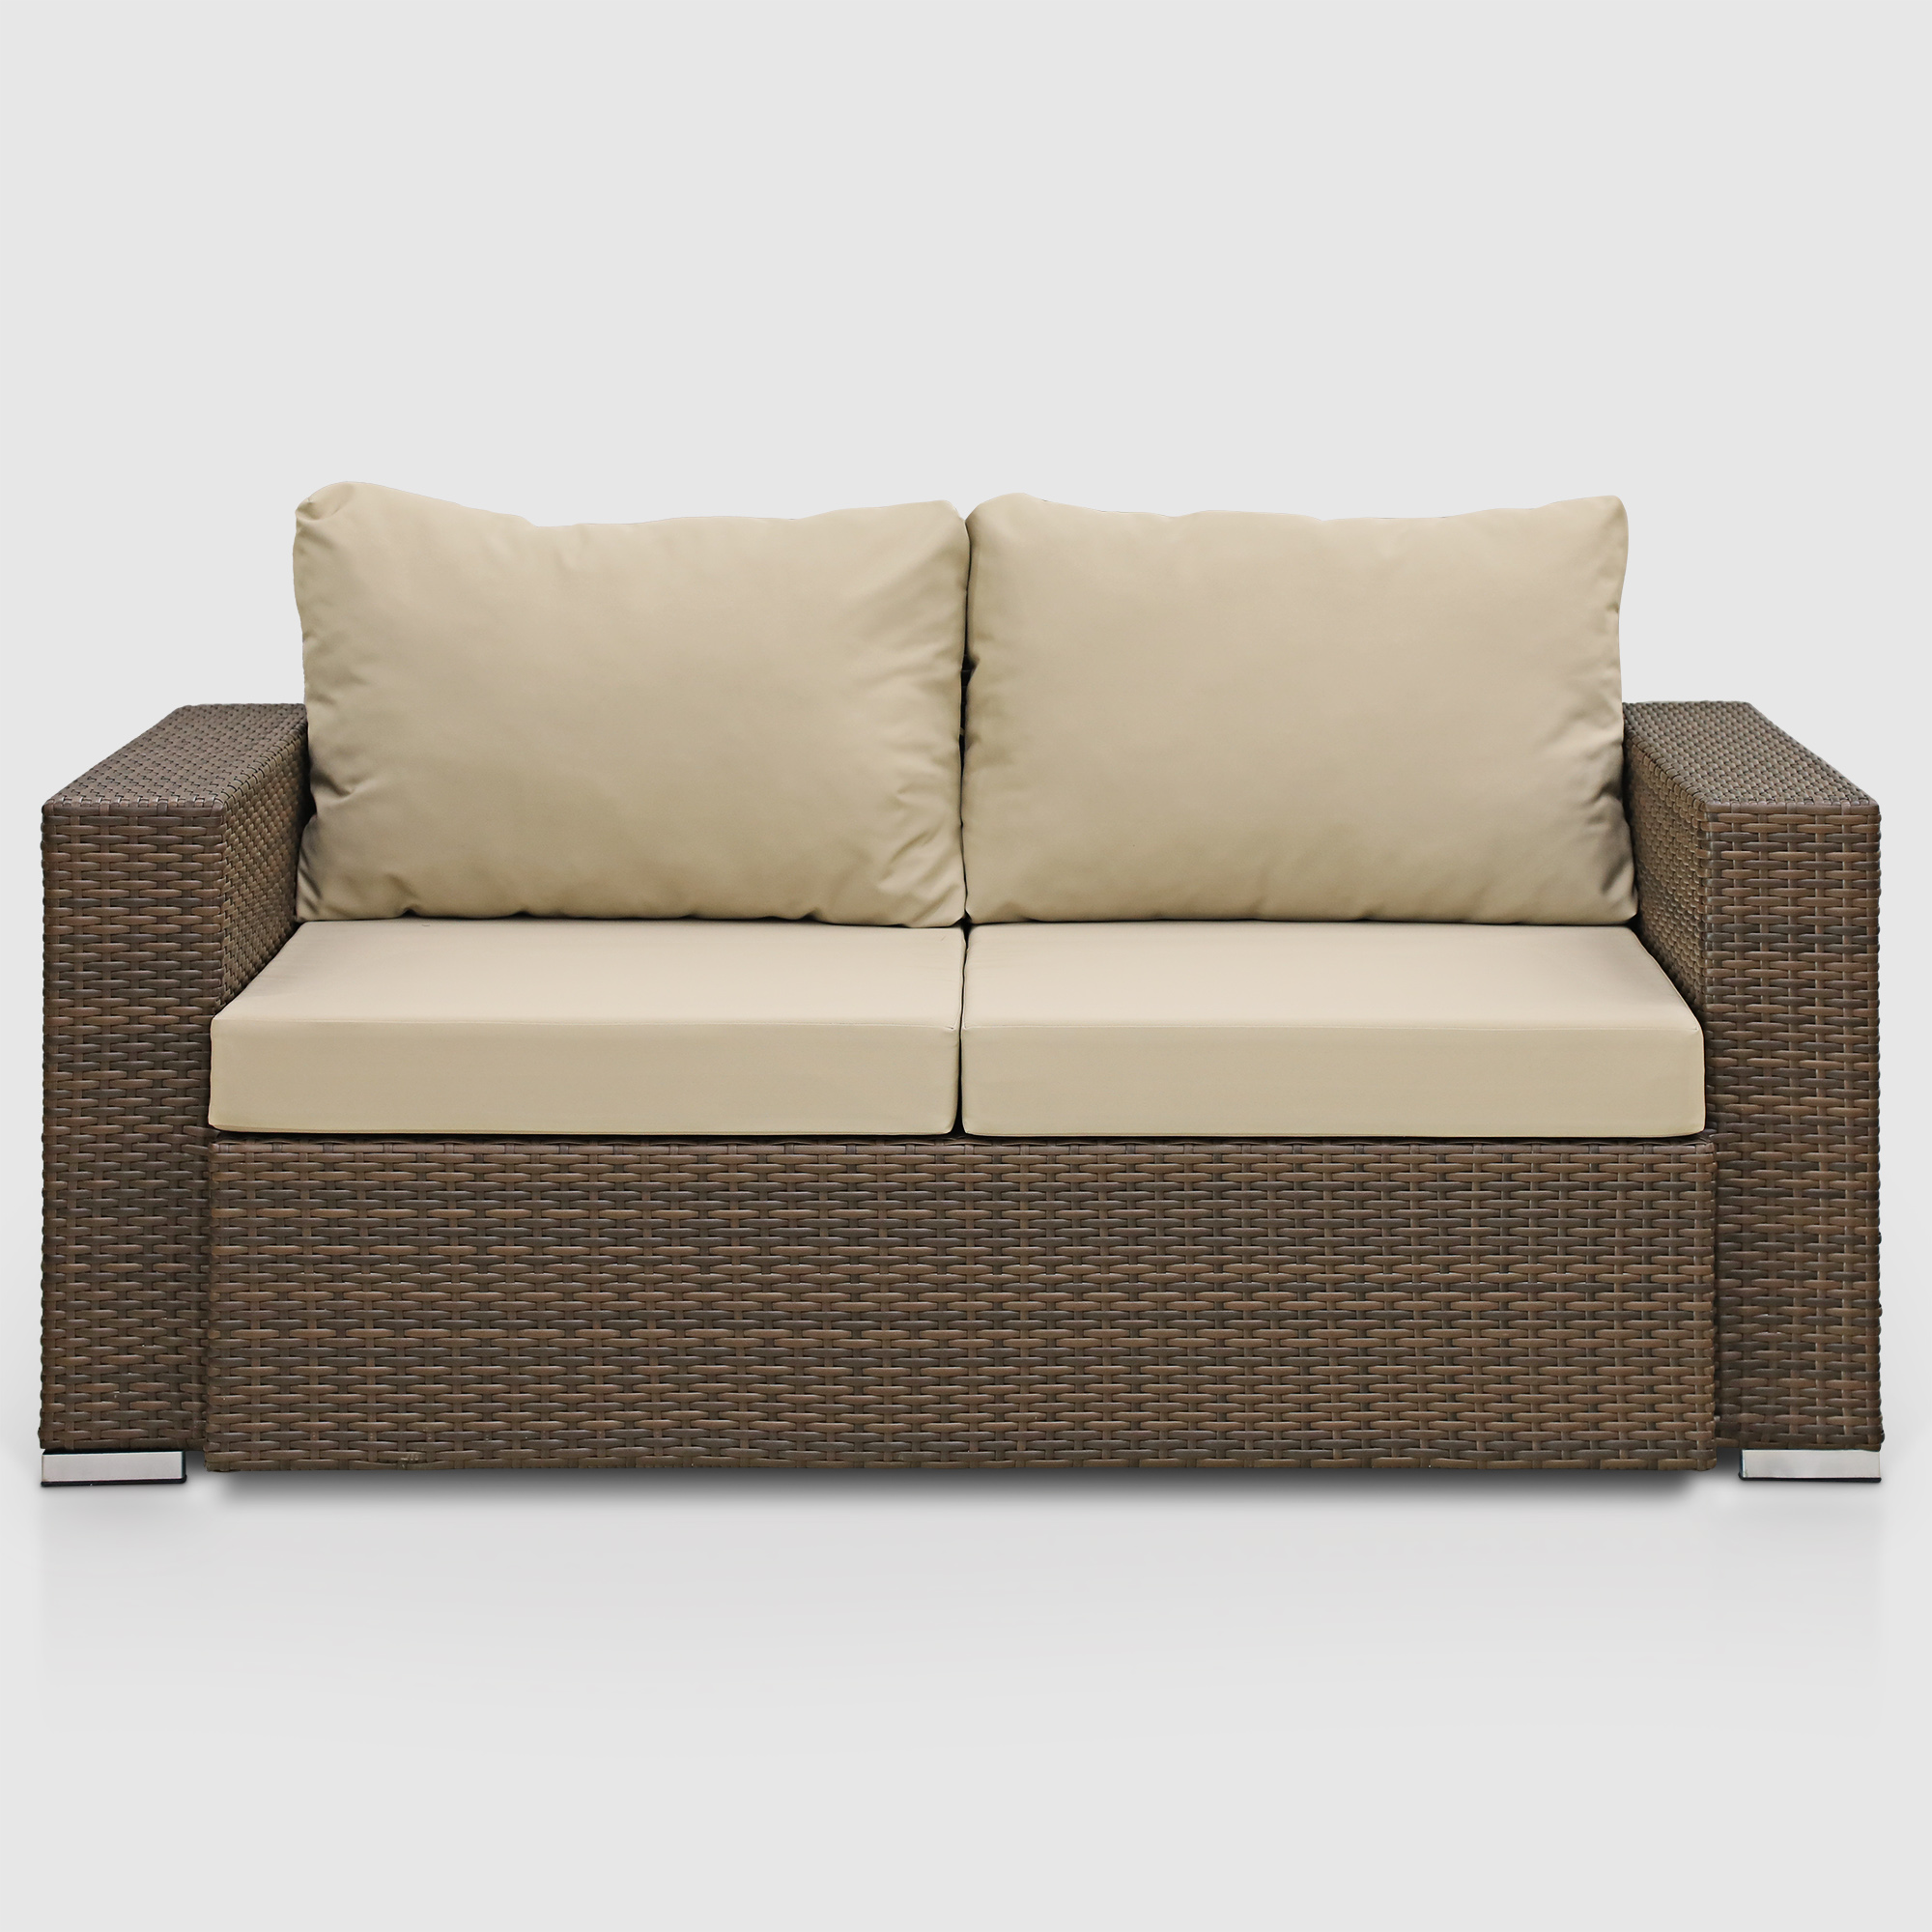 Комплект мебели Ns Rattan Cleo коричневый с бежевым 7 предметов, цвет бежевый, размер 224х88х70 - фото 7